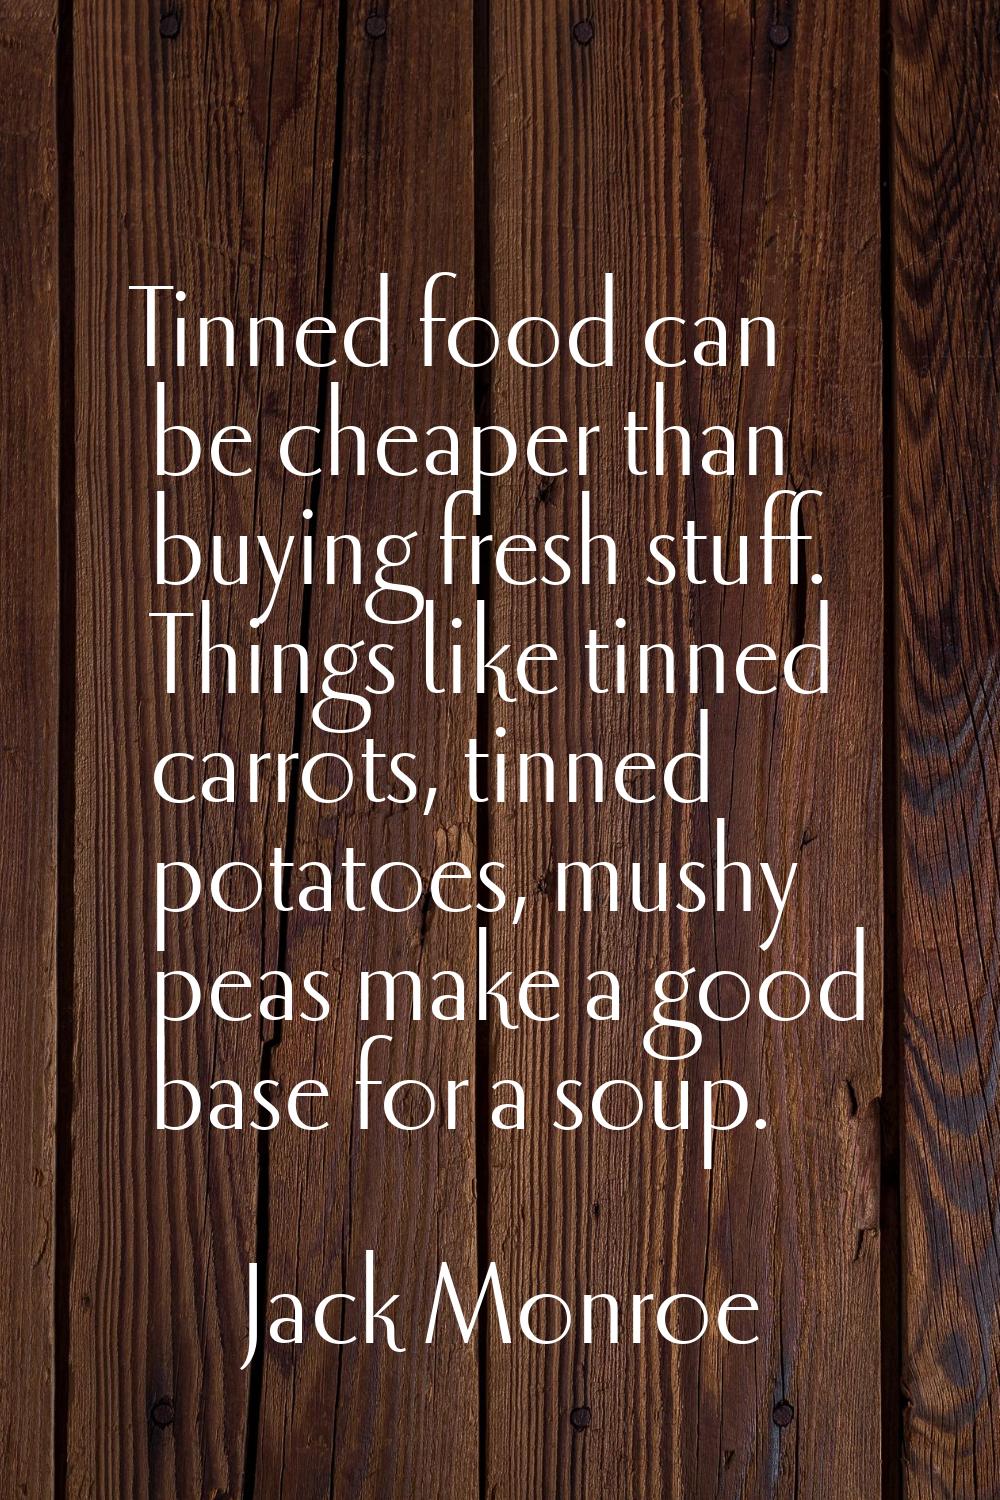 Tinned food can be cheaper than buying fresh stuff. Things like tinned carrots, tinned potatoes, mu